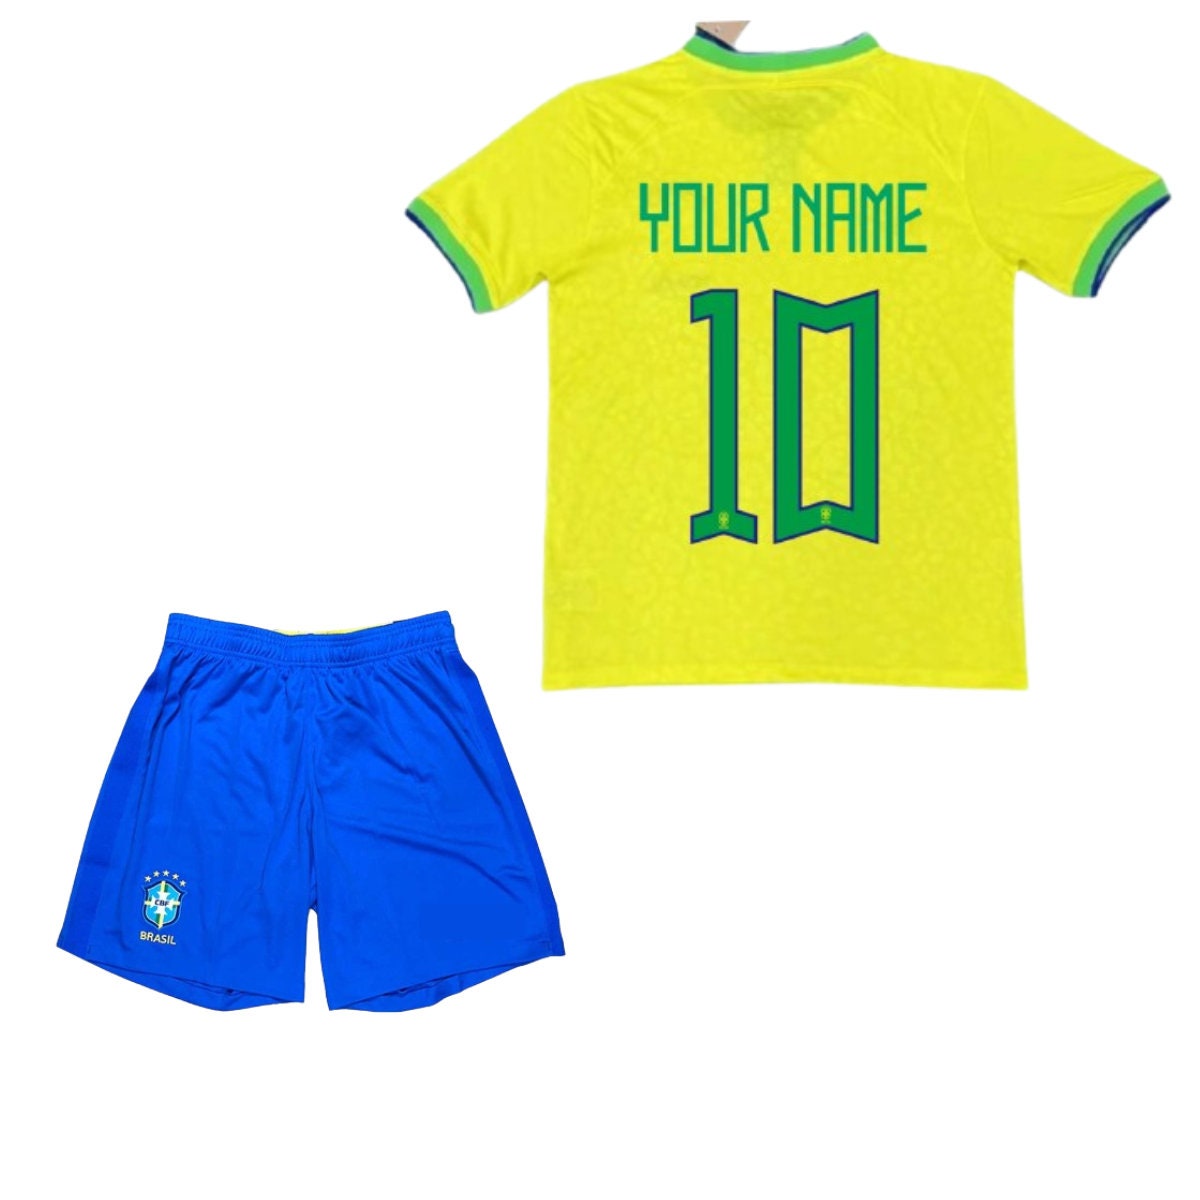 2022-2023 Special Version Brazil Black Thailand Soccer Jersey AAA-416,Brazil